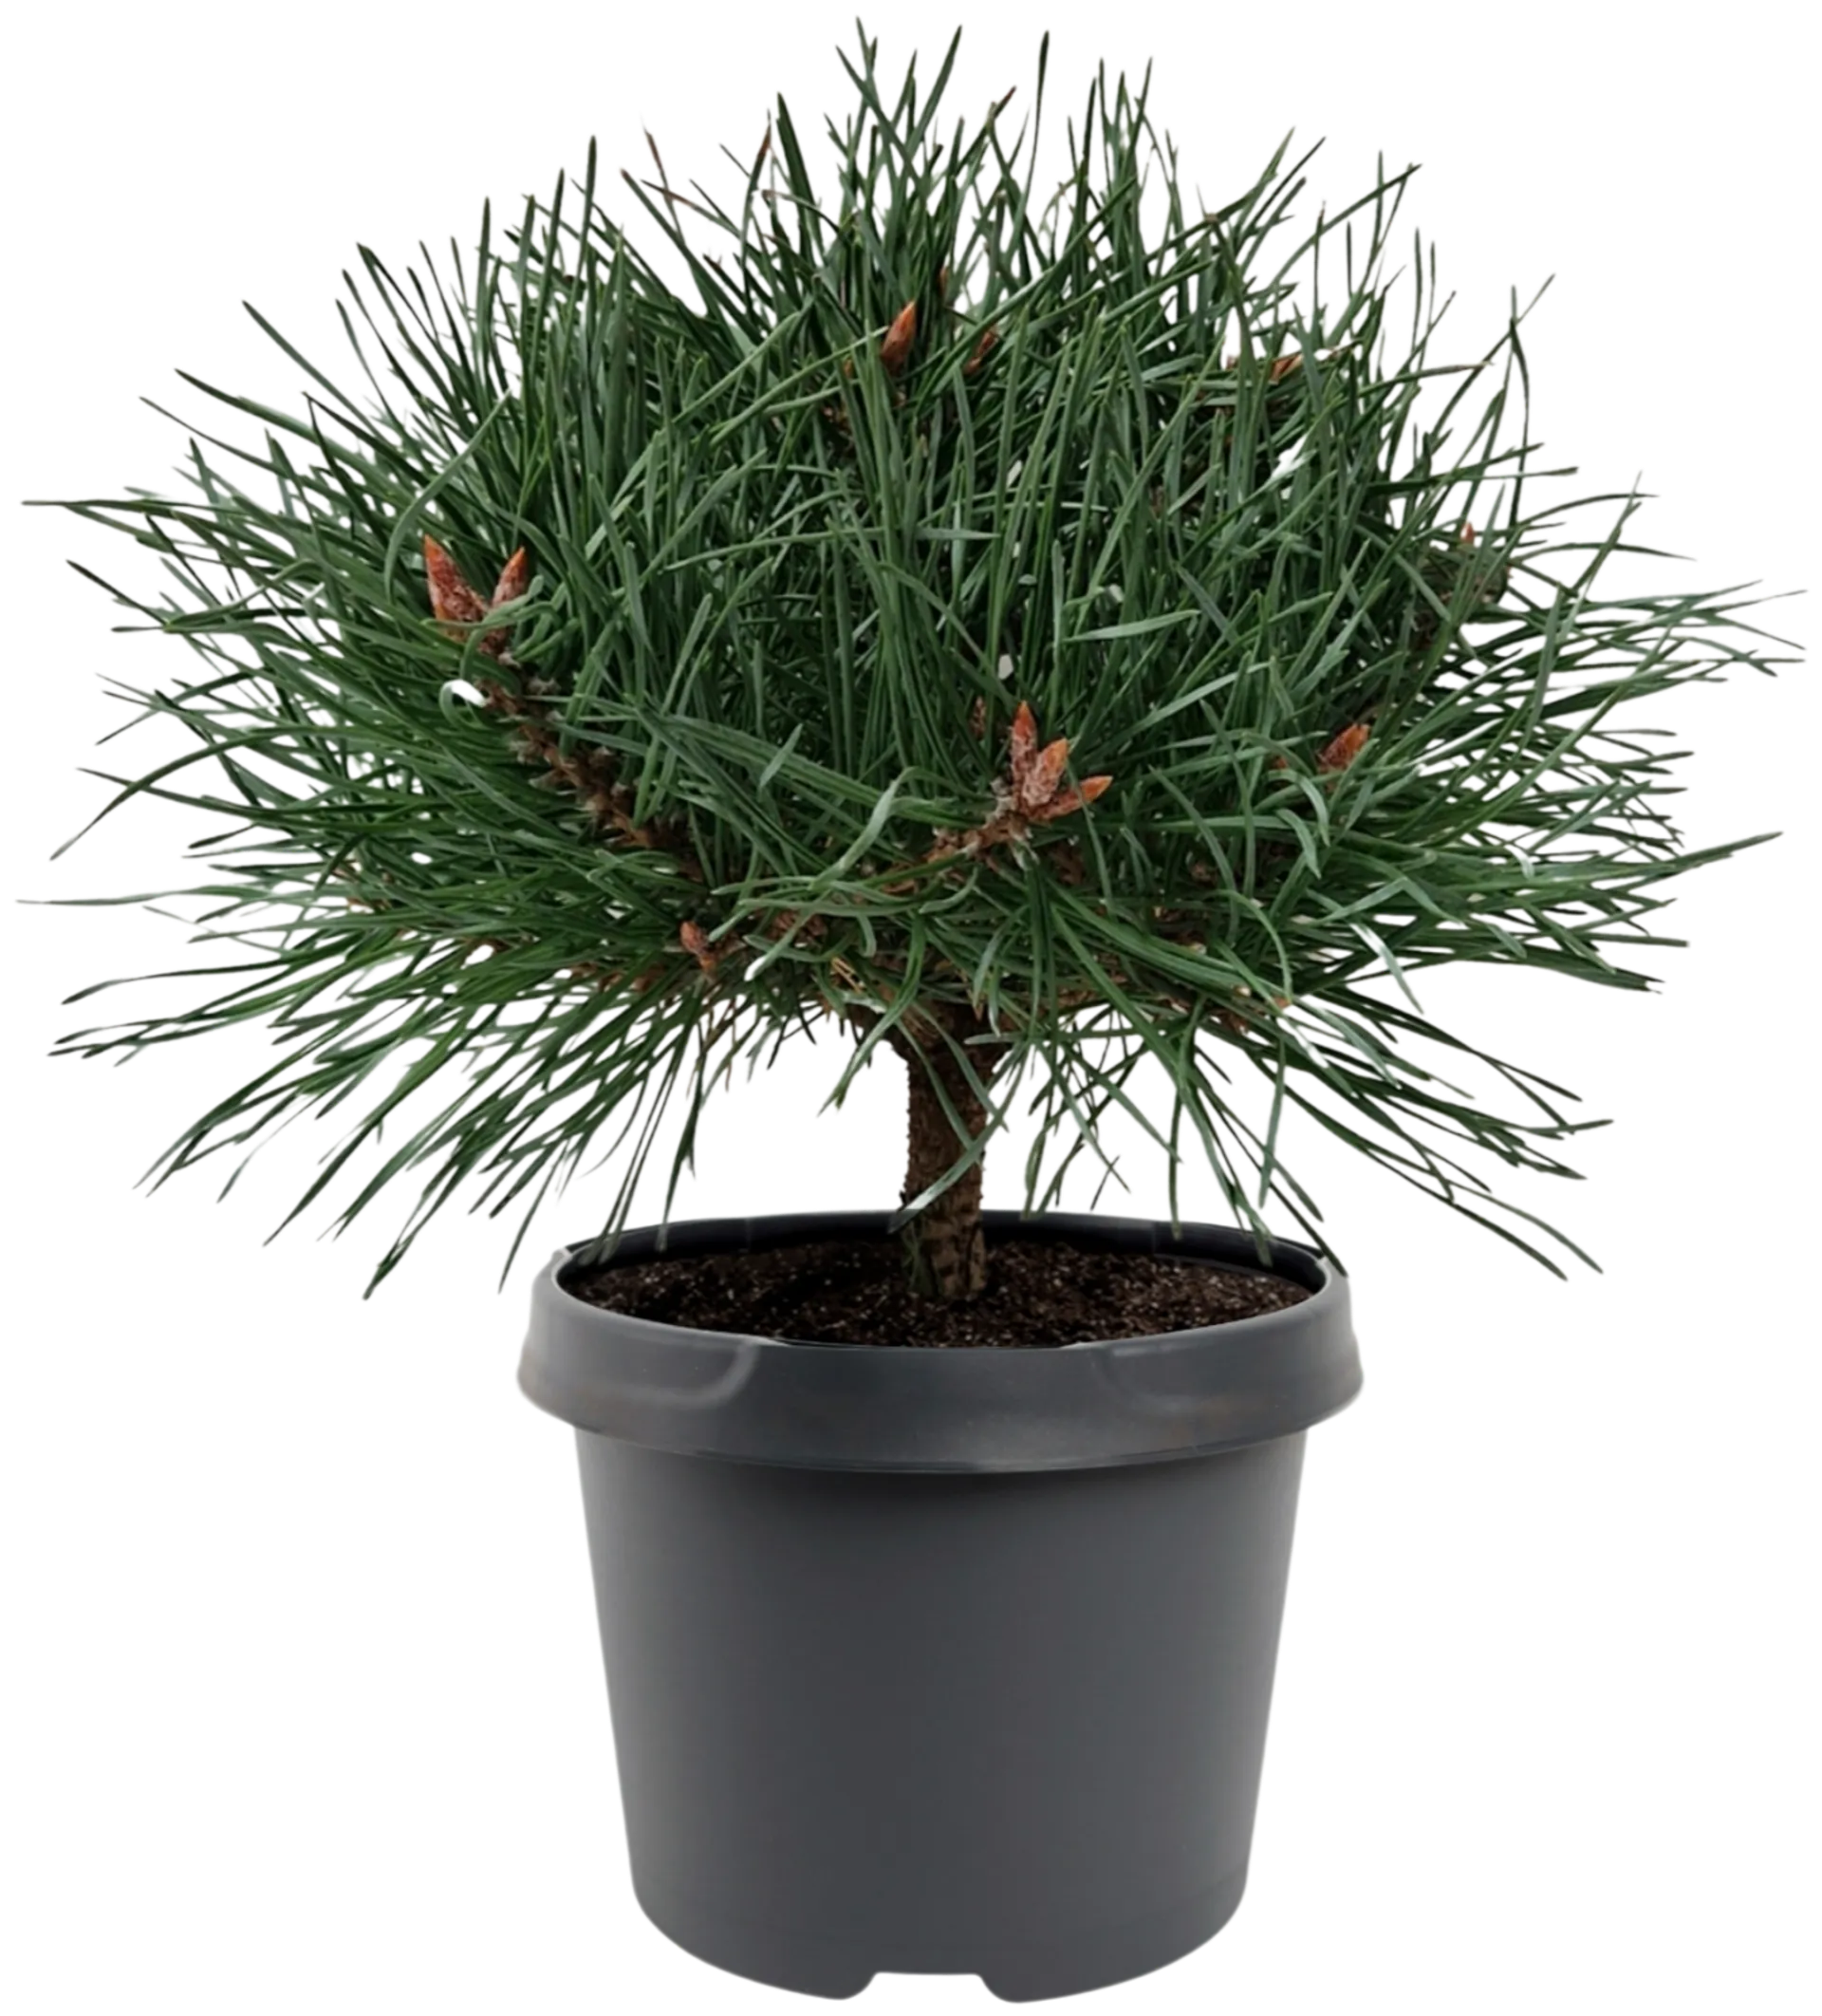 Mänty 'Chantry Blue' 25-30 cm astiataimi 3 l ruukku Pinus sylvestris 'Chantry Blue'